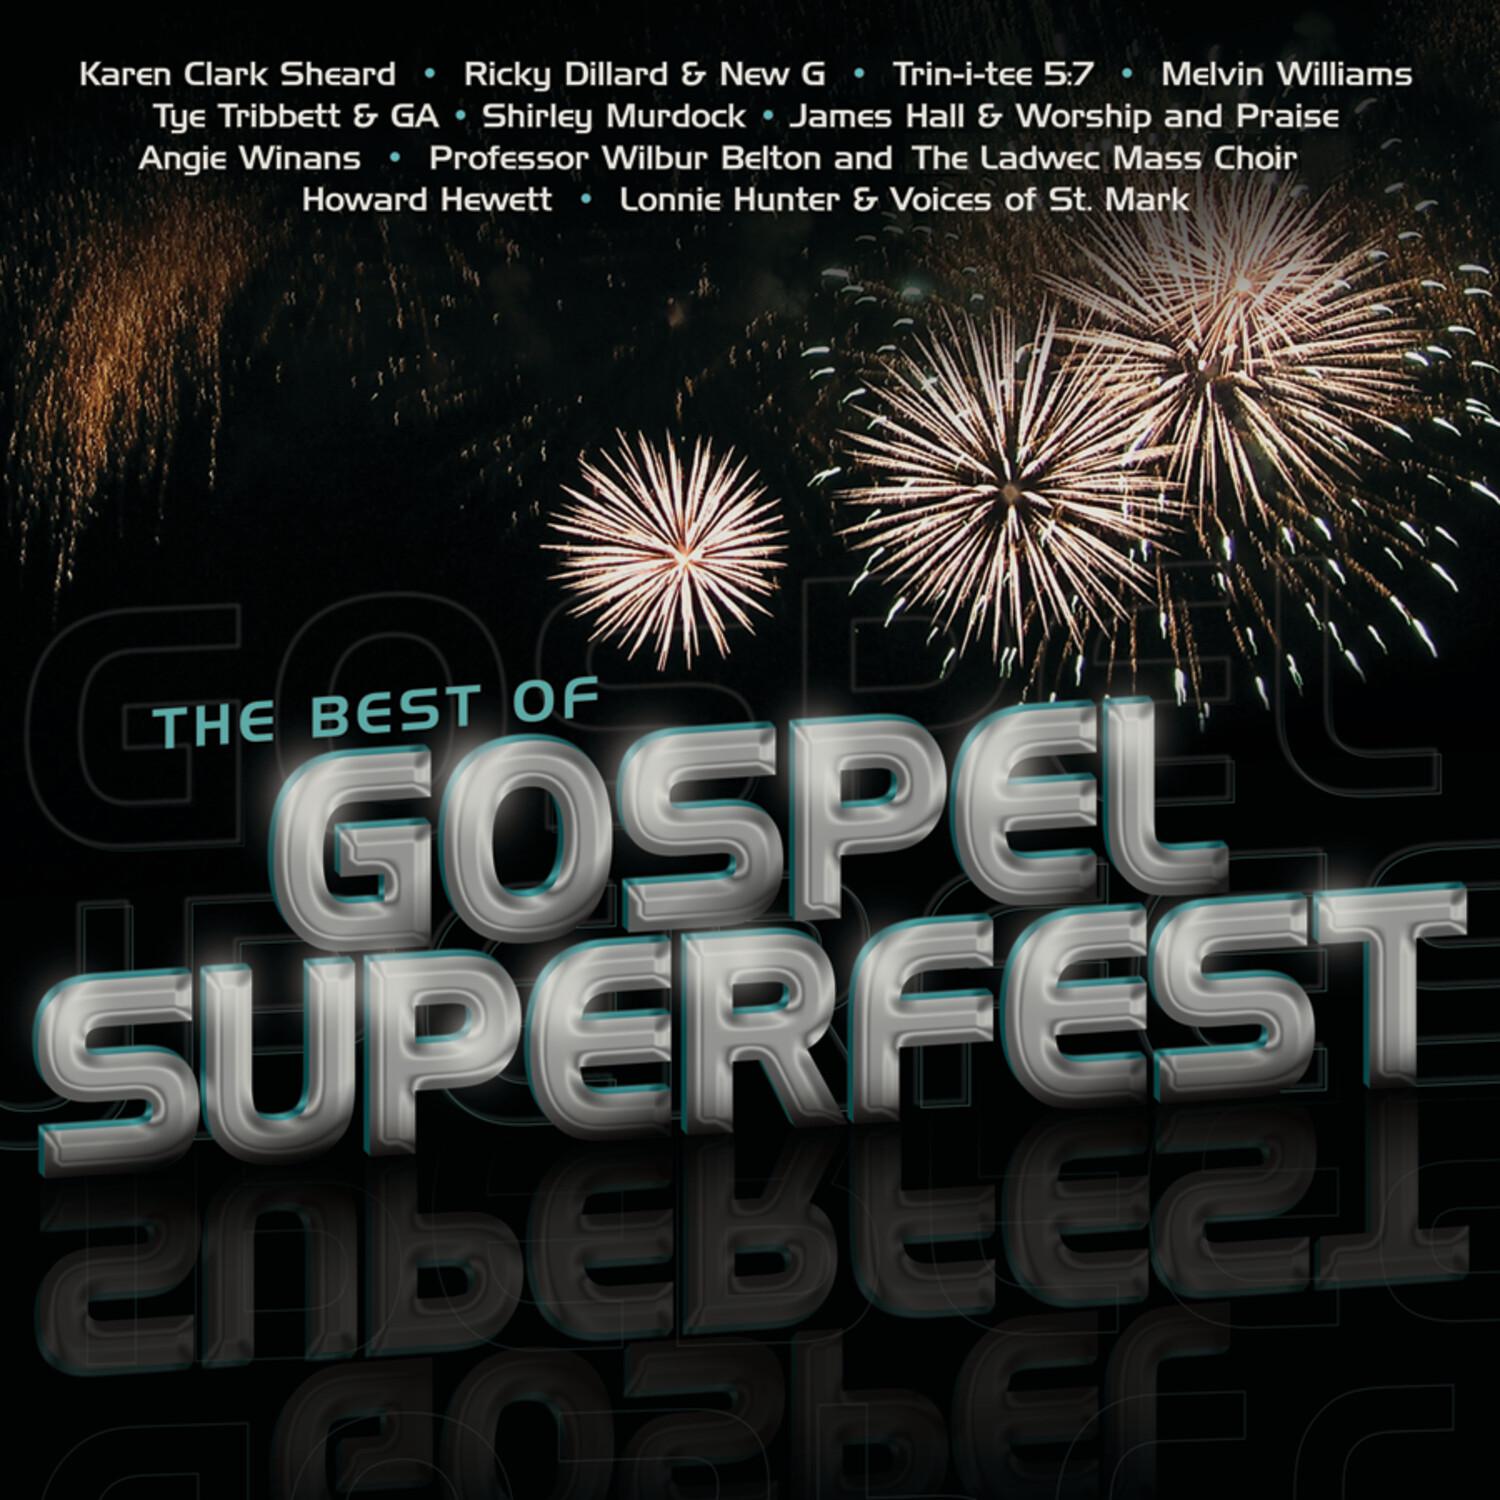 The Best Of Gospel Superfest (Live)